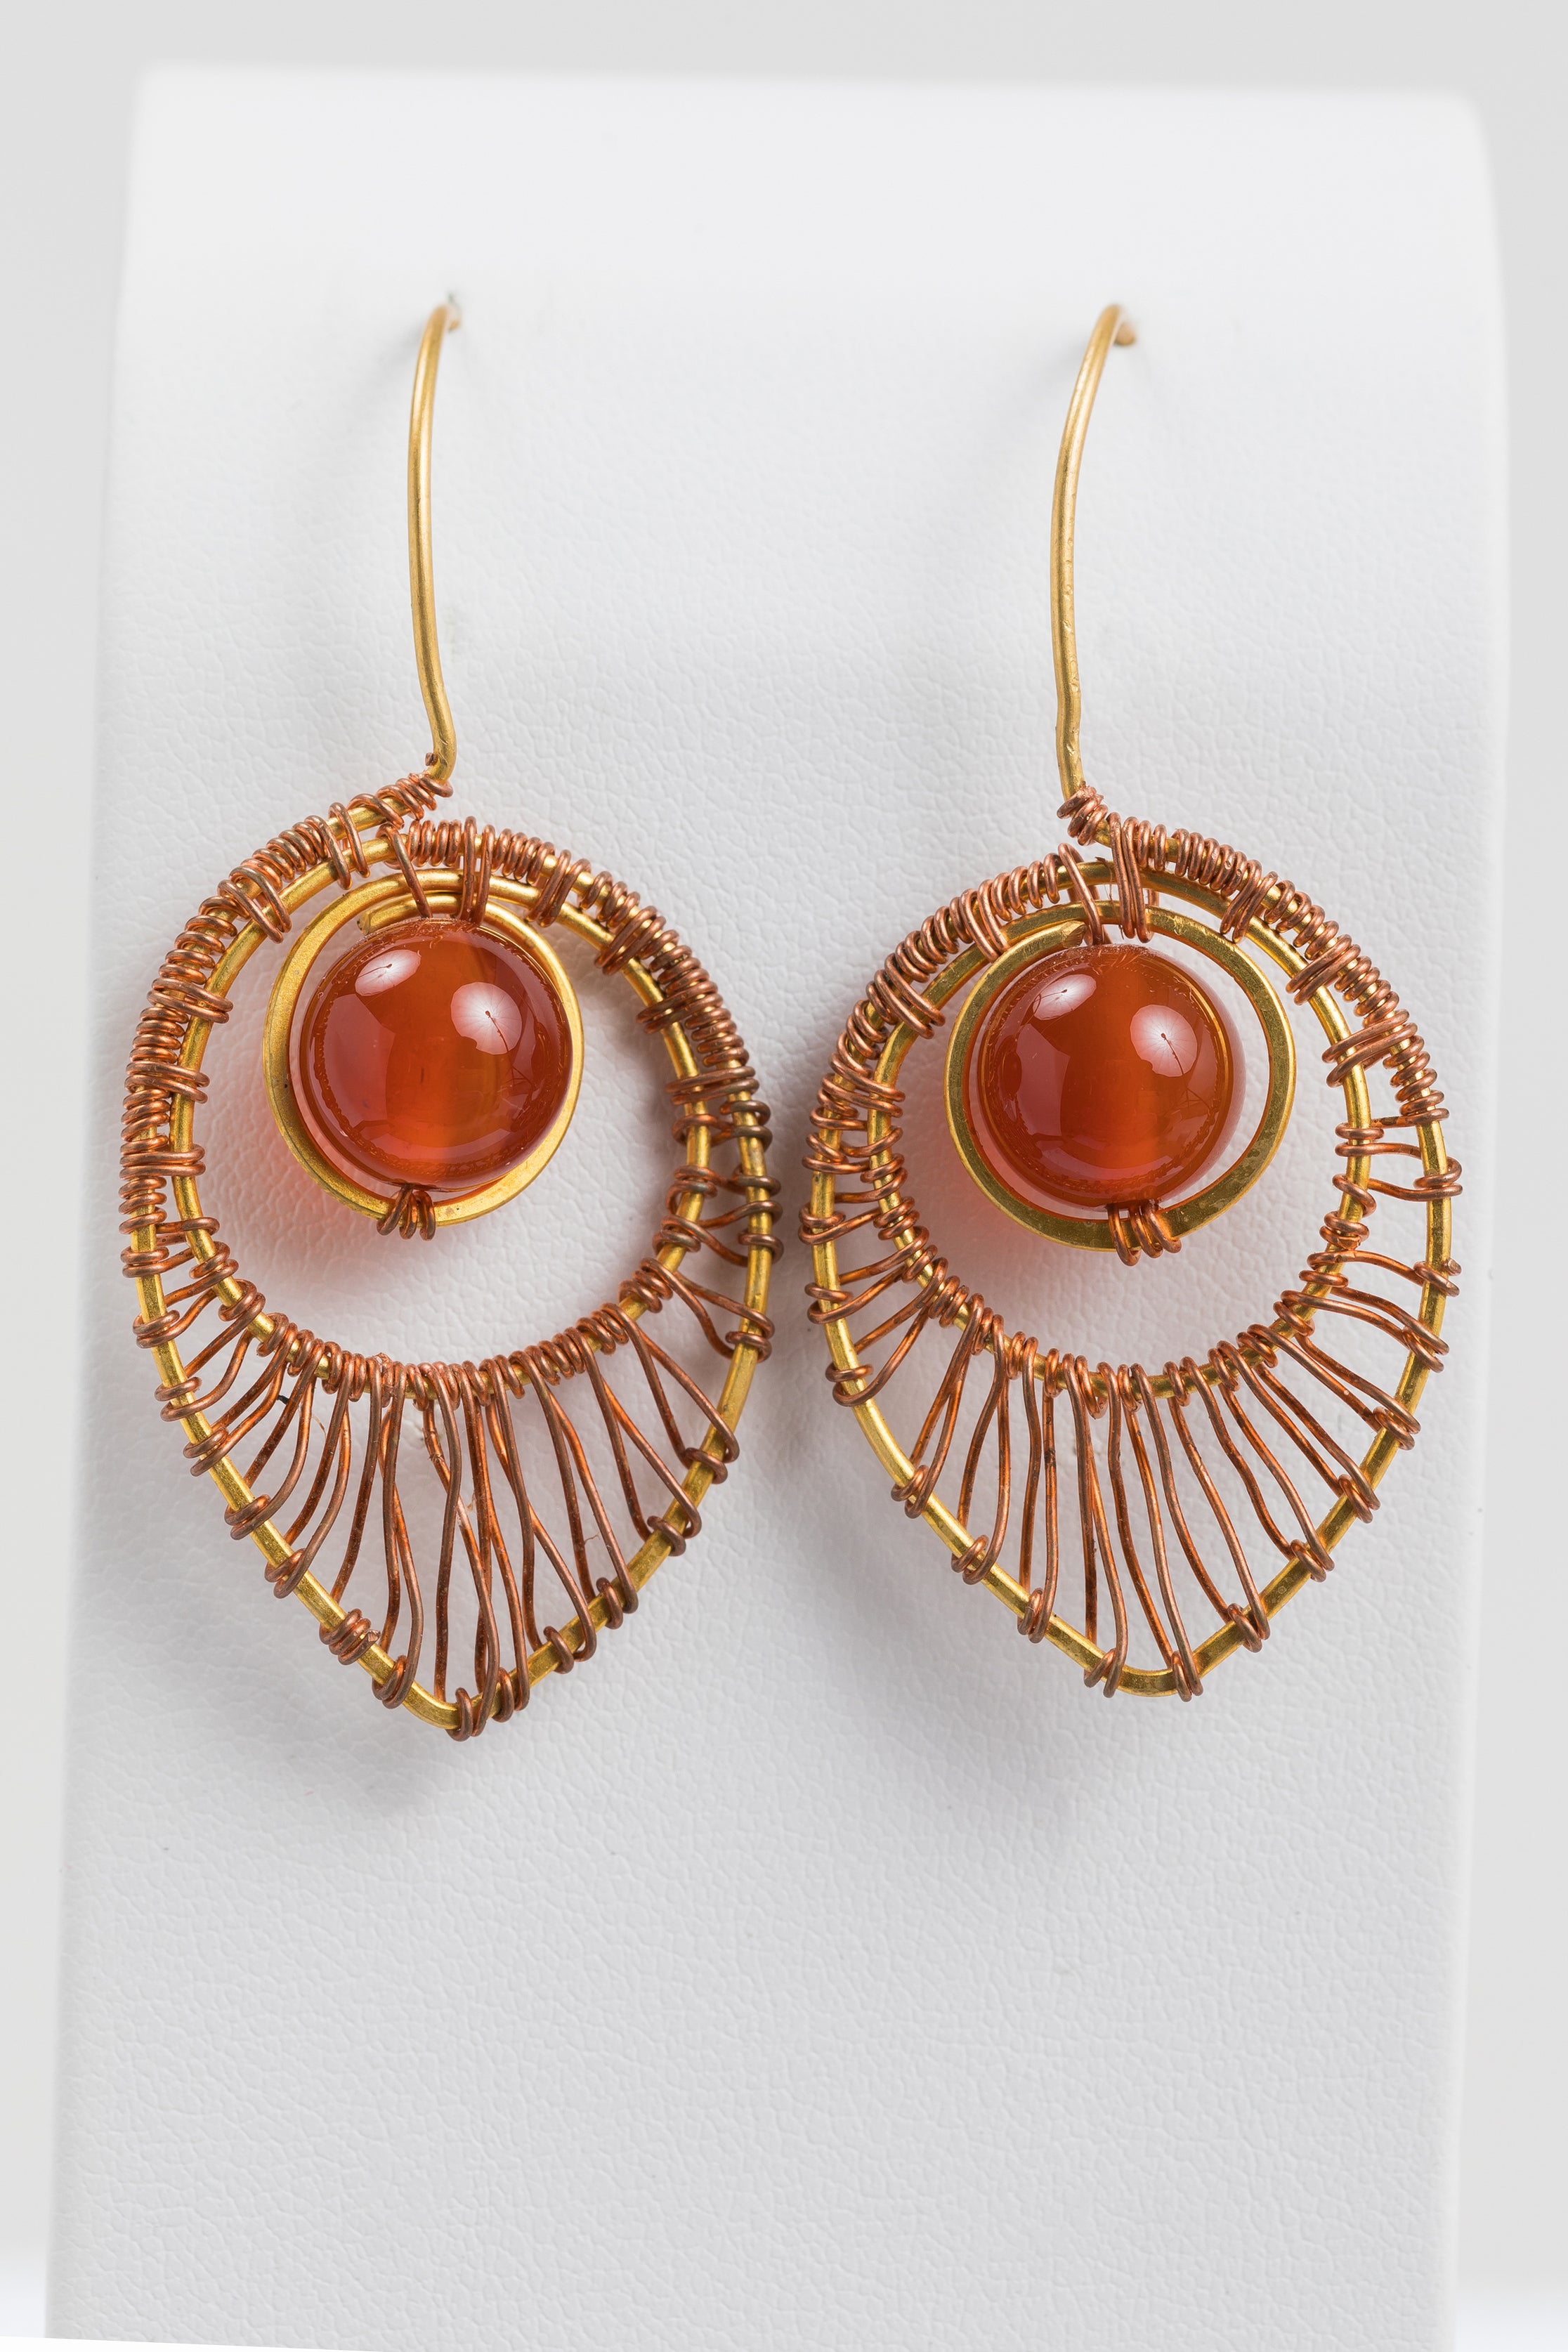 Larki Designs Gold Twisted Metal & Red Stone Earrings